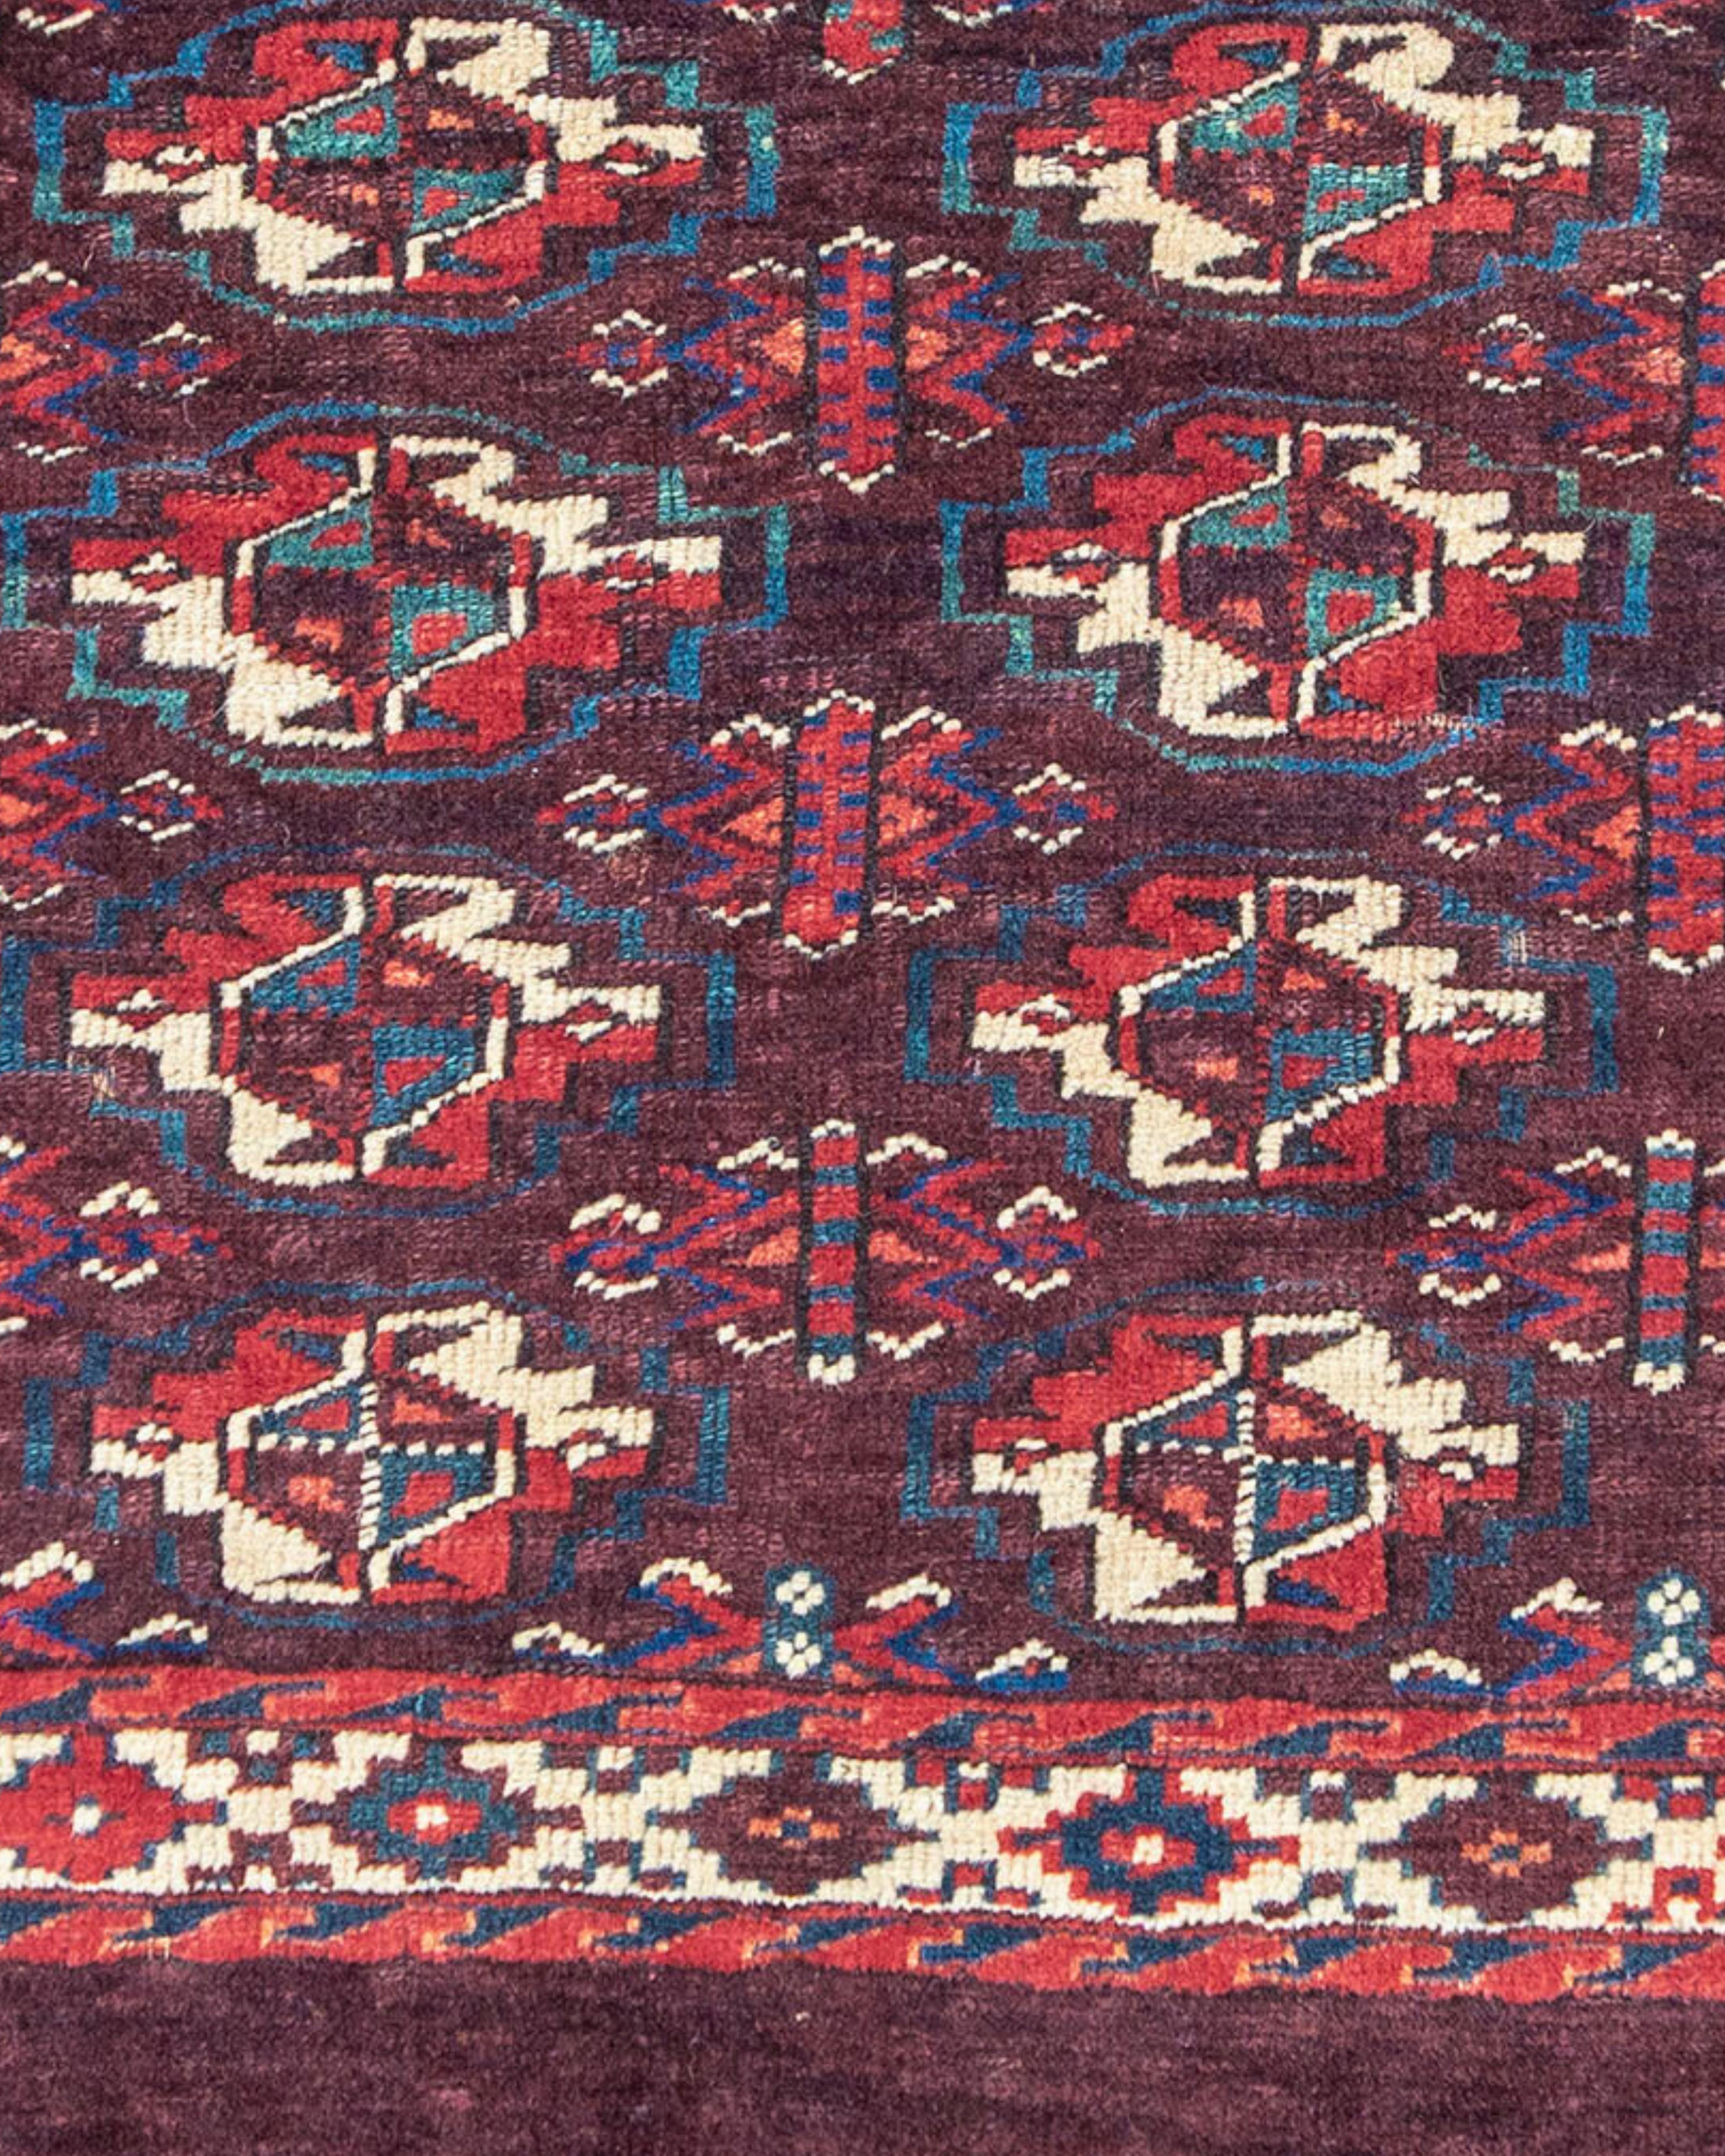 Ancien tapis turkmène Yomut Chuval, 19e siècle

Informations supplémentaires :
Dimensions : 1.10